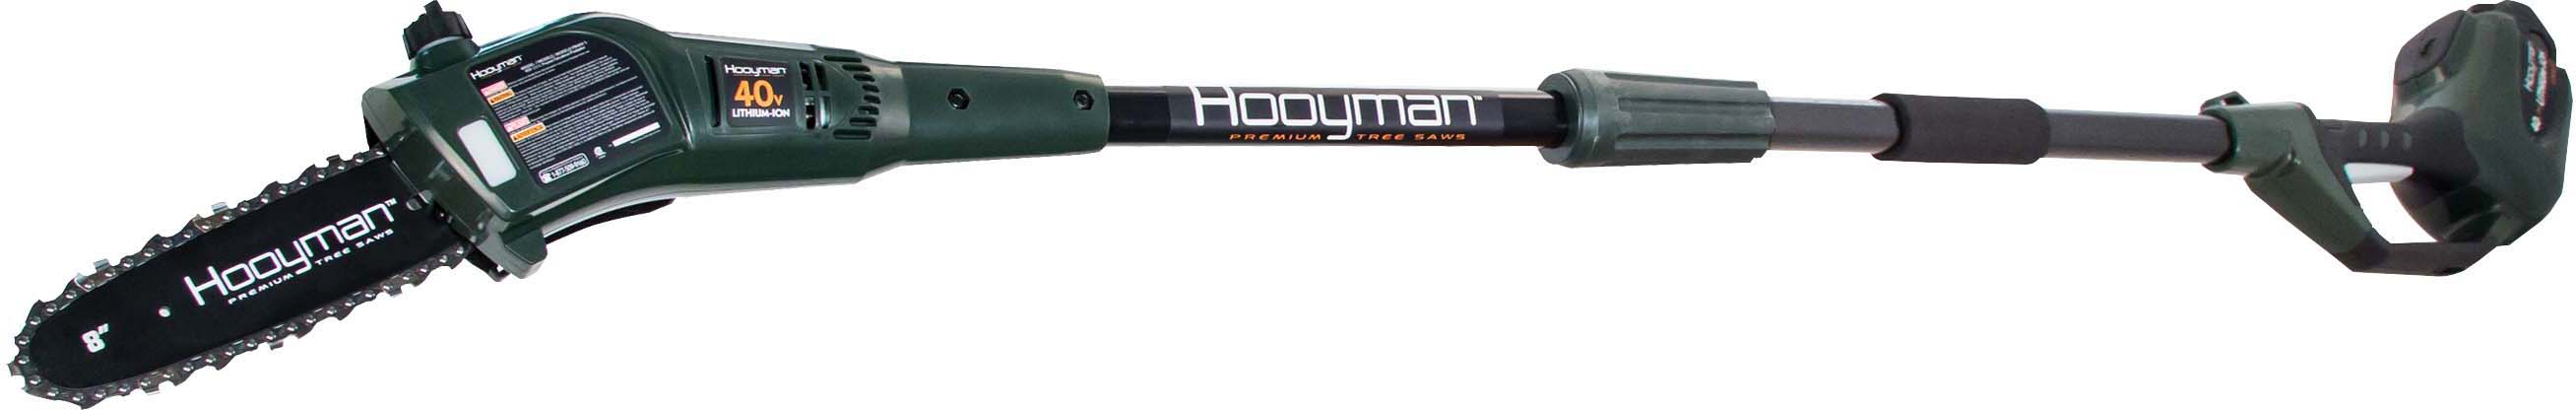 Hooyman 10ft Cordless 40 Volt Lithium Pole Saw 655236 for sale online 